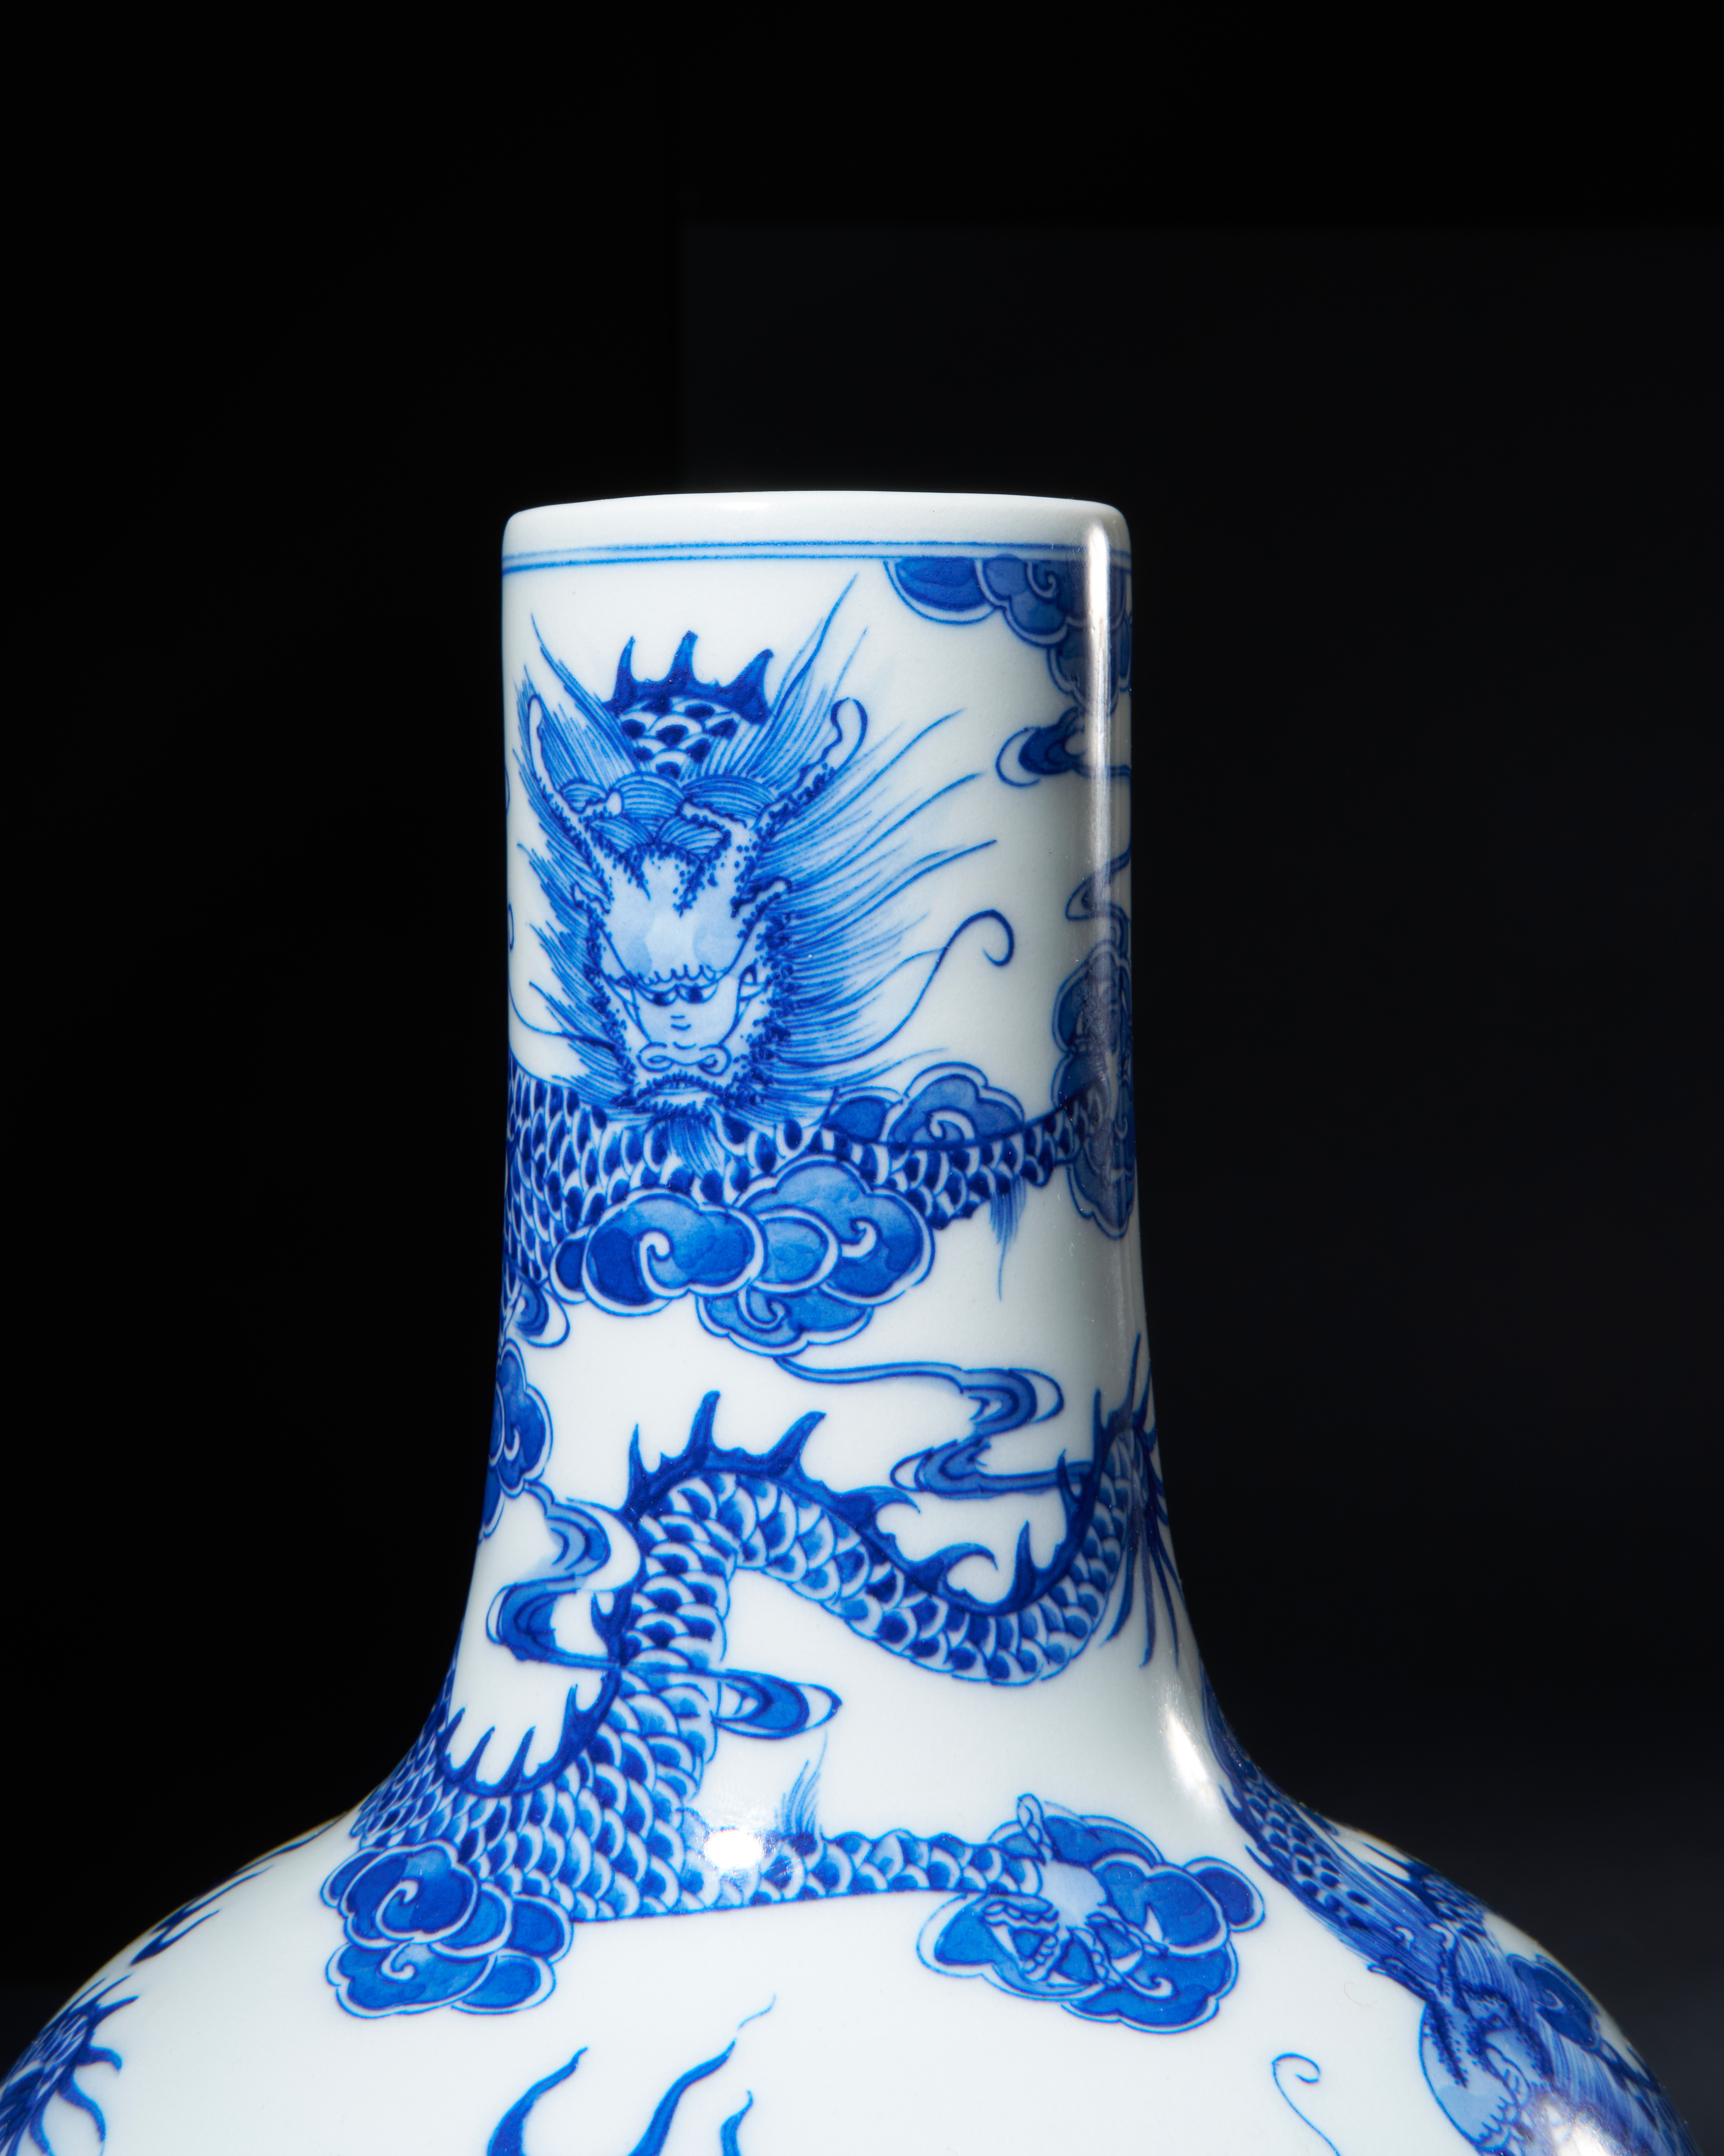 A CHINESE BLUE & WHITE BOTTLE VASE, QING DYNASTY (1644-1911) - Image 4 of 6